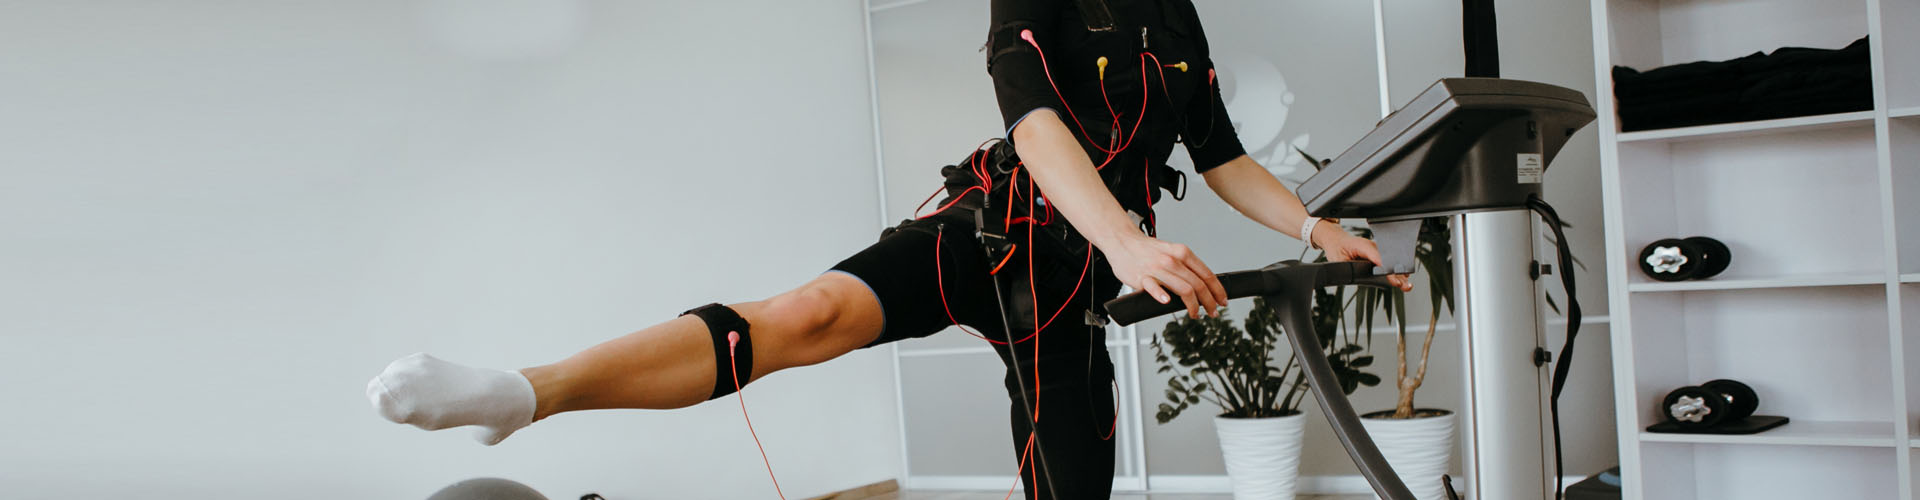 miha bodytec électro stimulation musculaire